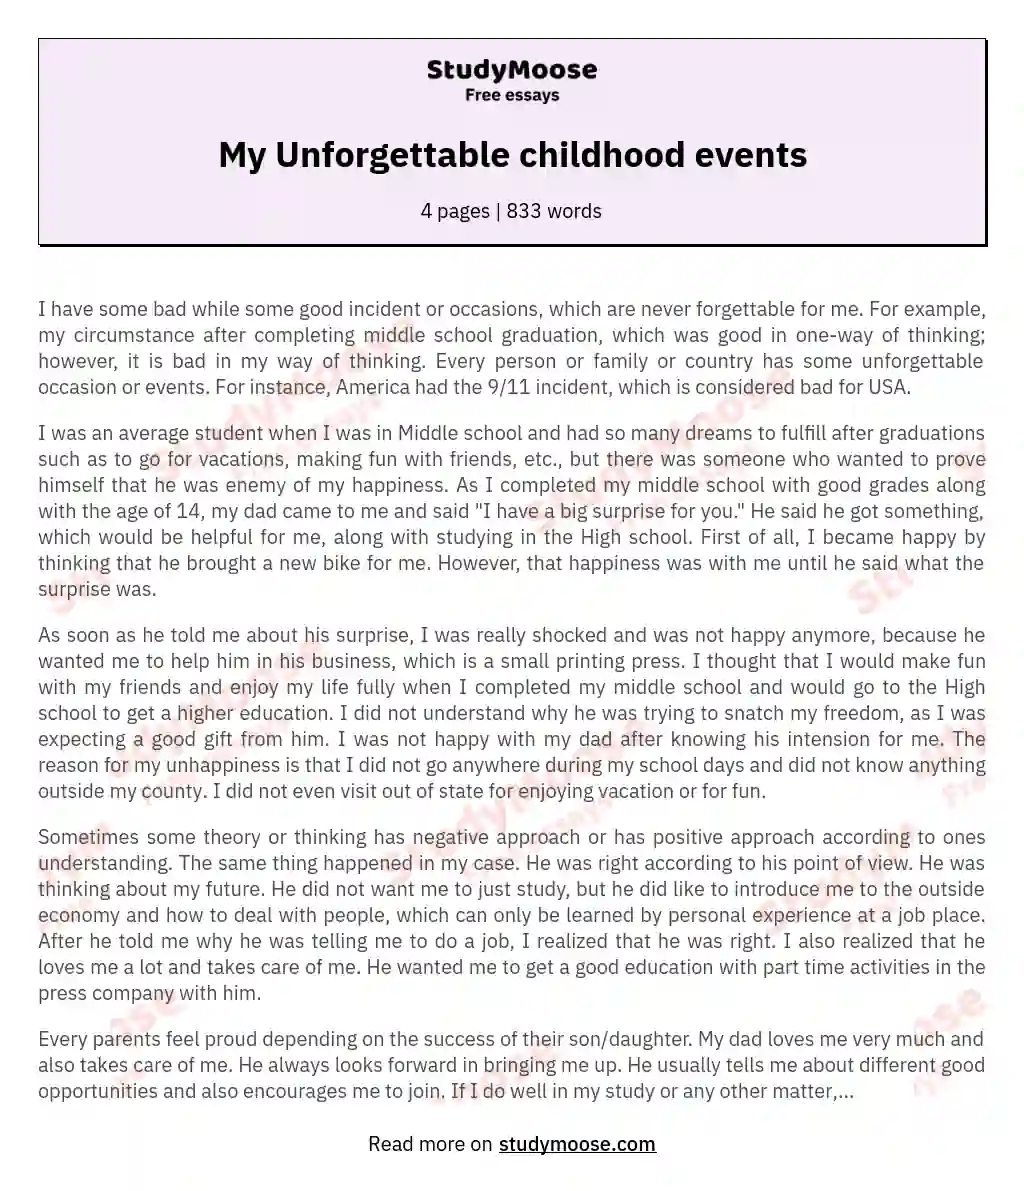 My Unforgettable childhood events essay